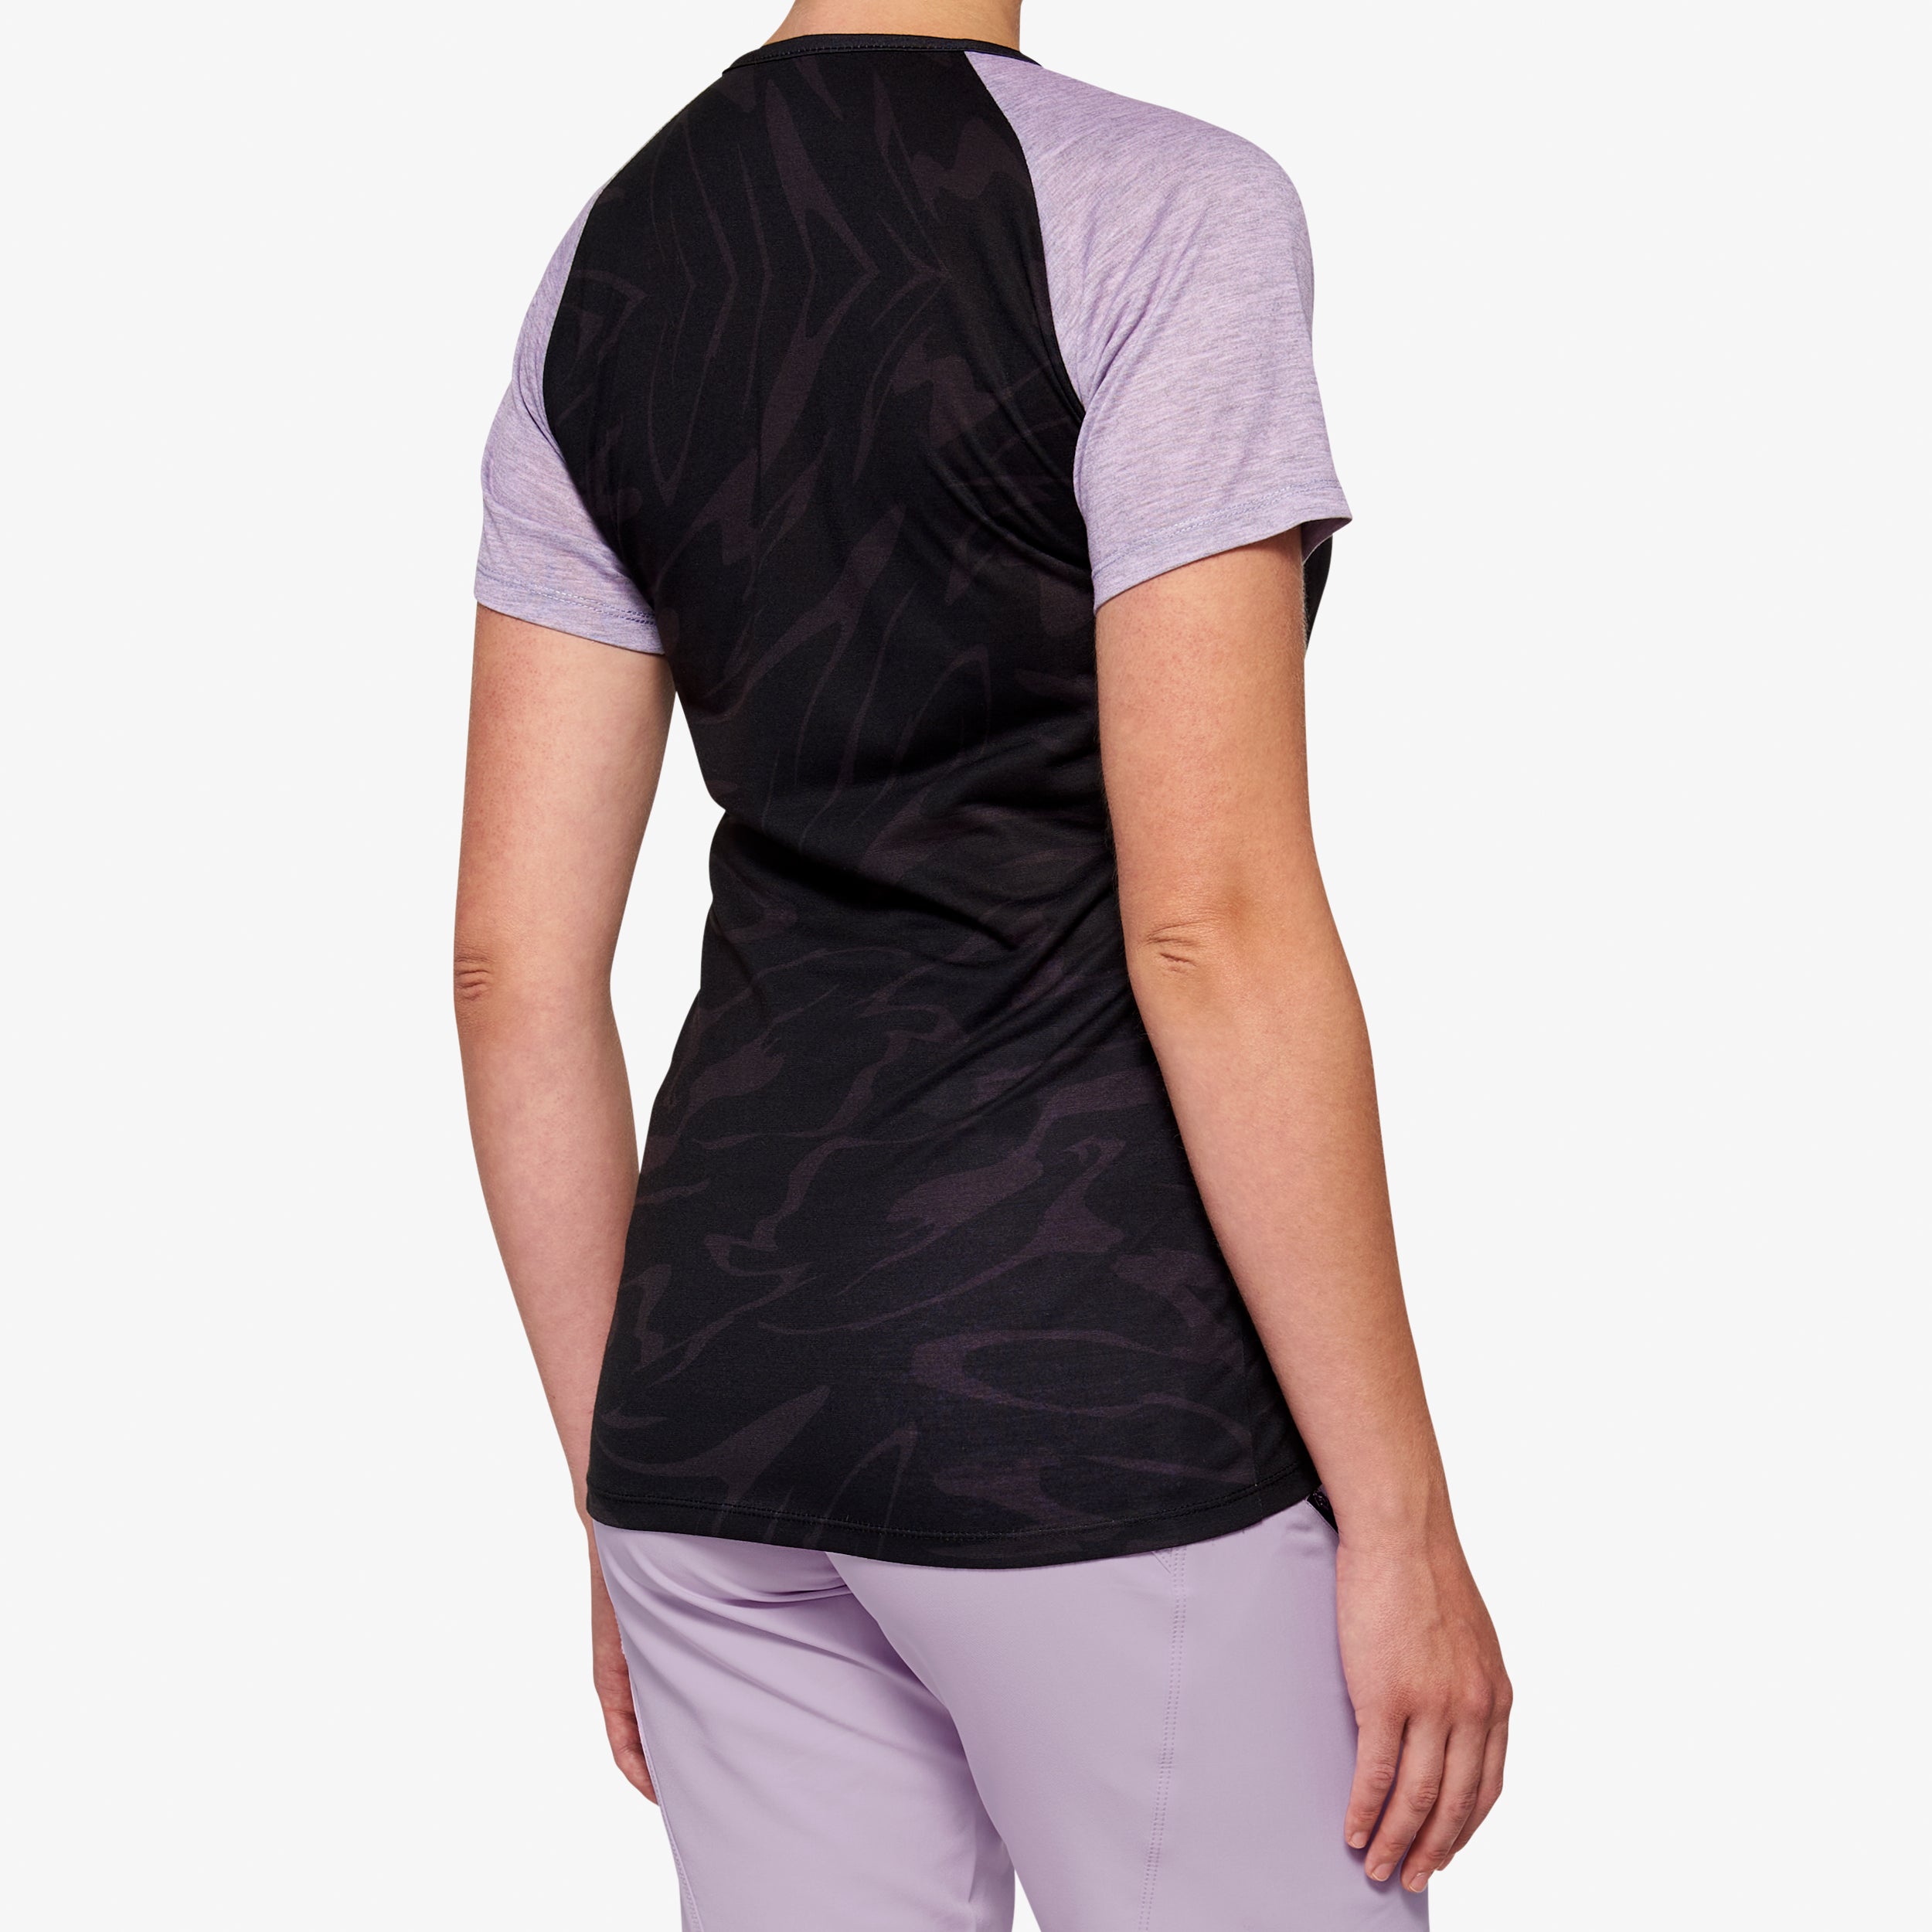 AIRMATIC Women's Short Sleeve Jersey Black/Lavender - Secondary